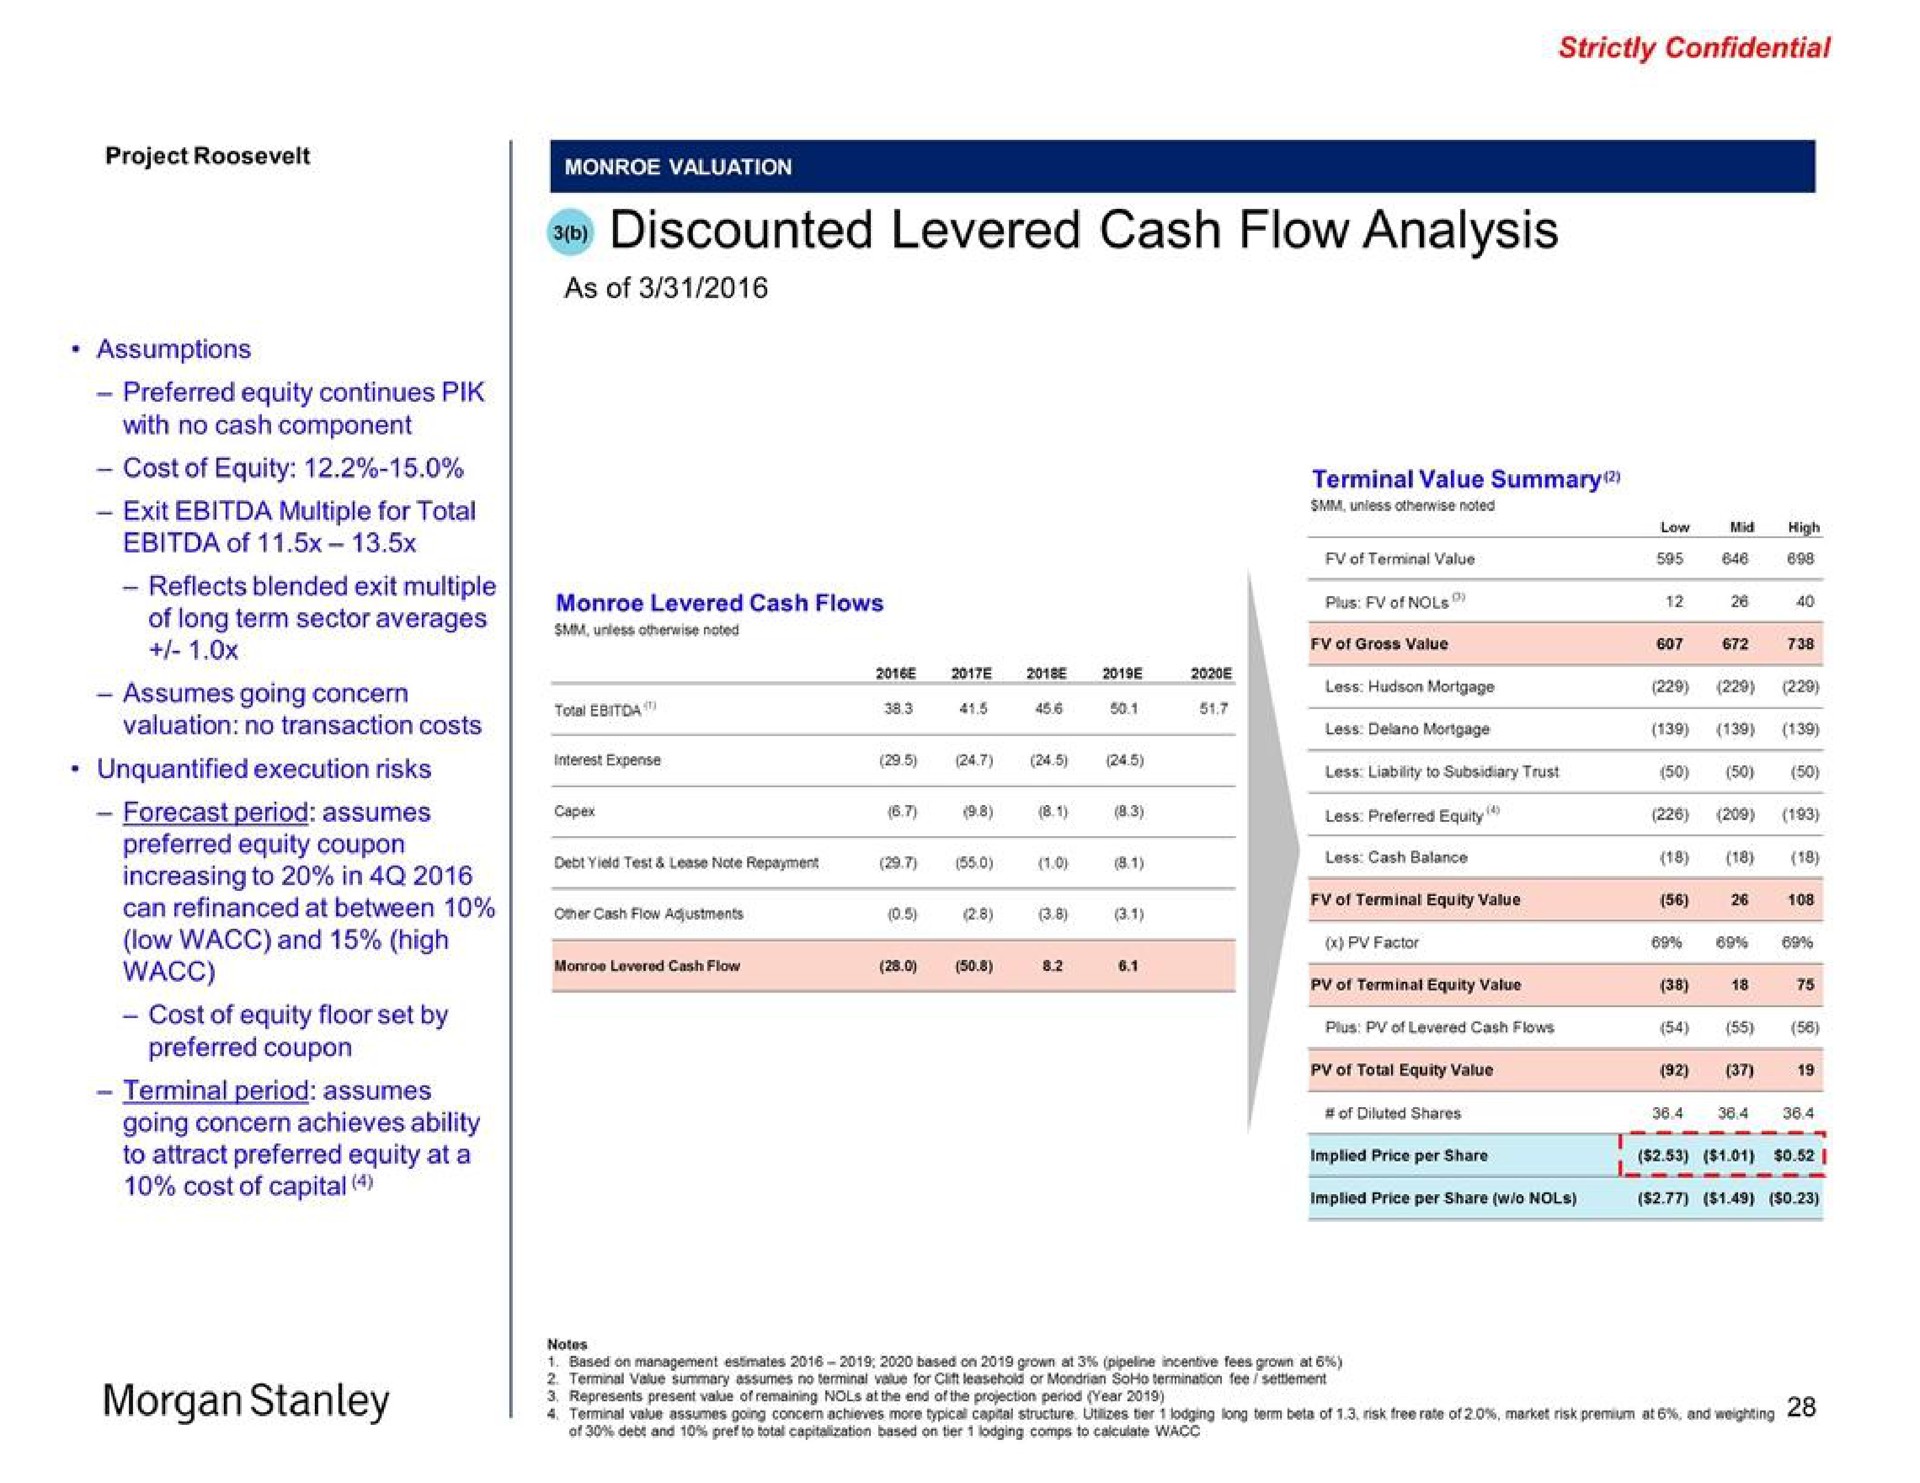 discounted levered cash flow analysis morgan | Morgan Stanley